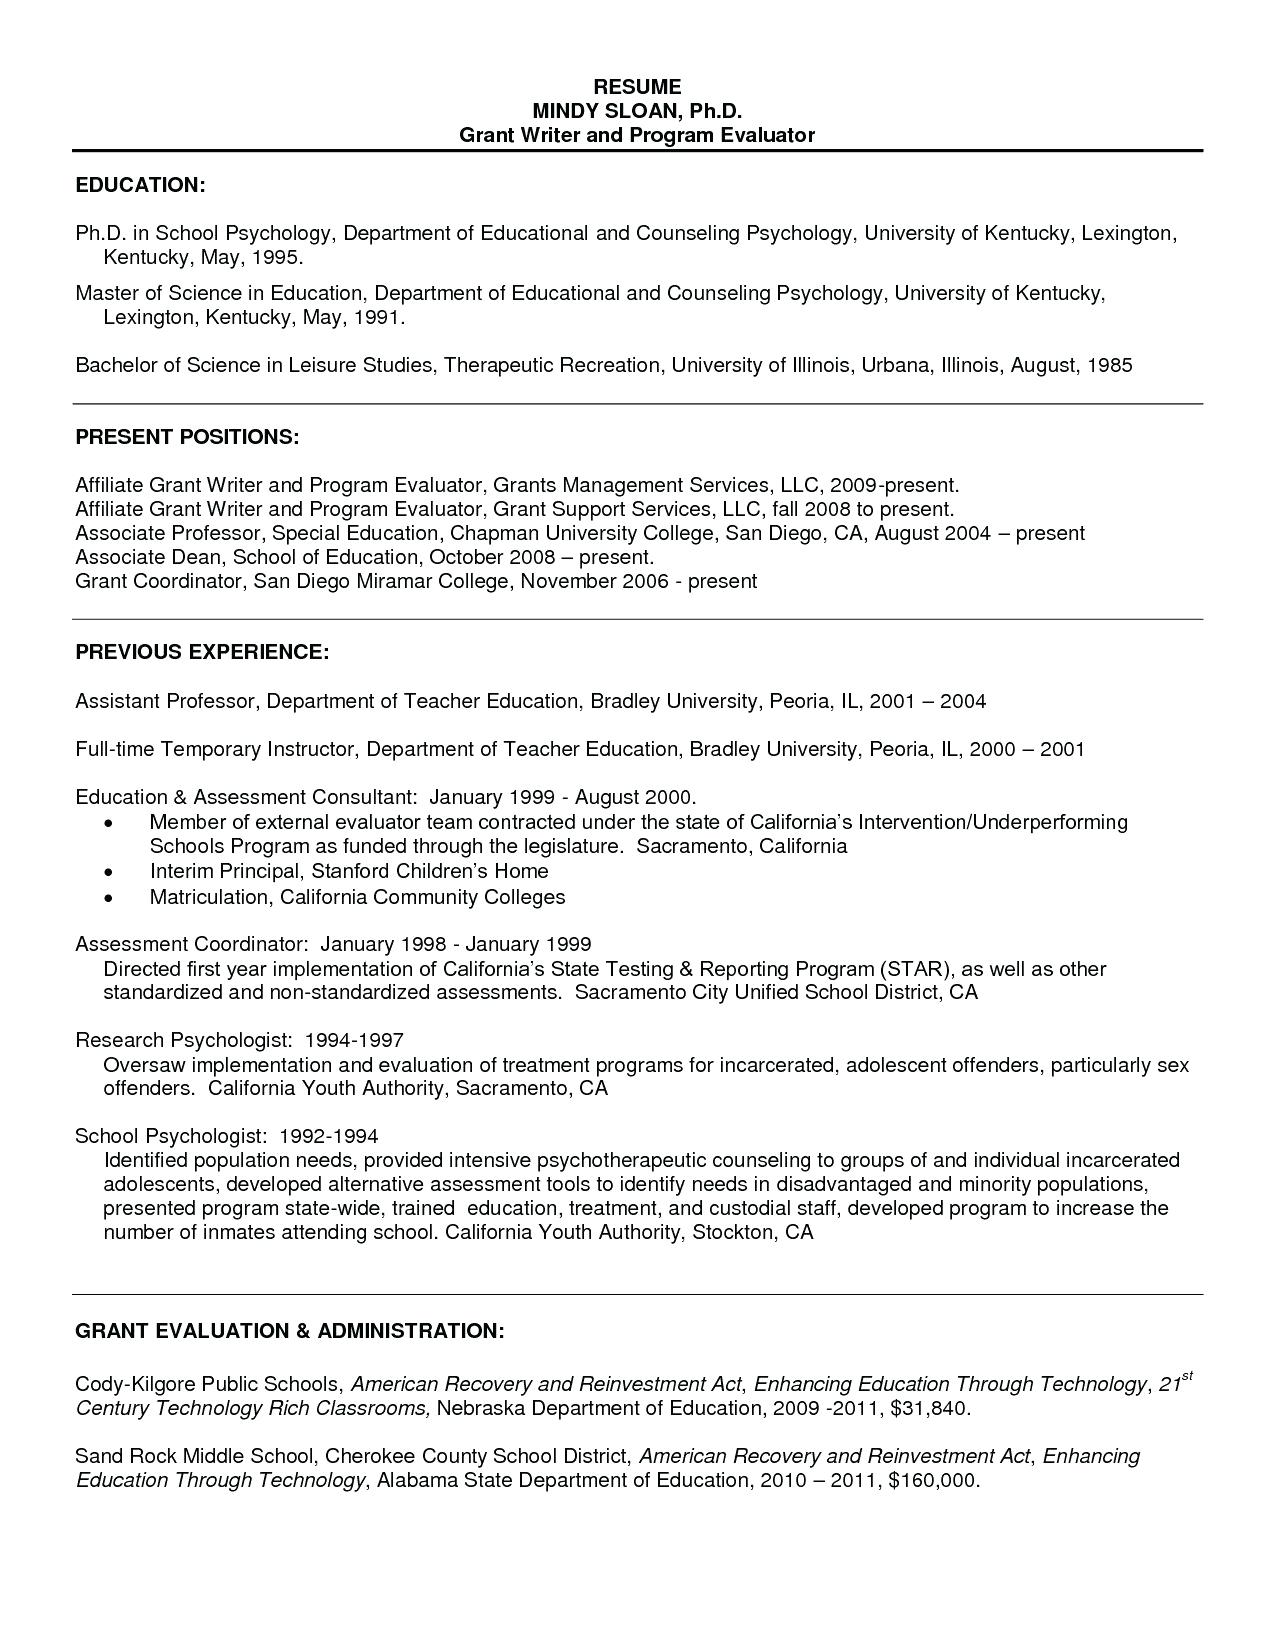 Resume For Graduate School Resume Templates For Masters Program Graduate School Sample Samples resume for graduate school|wikiresume.com